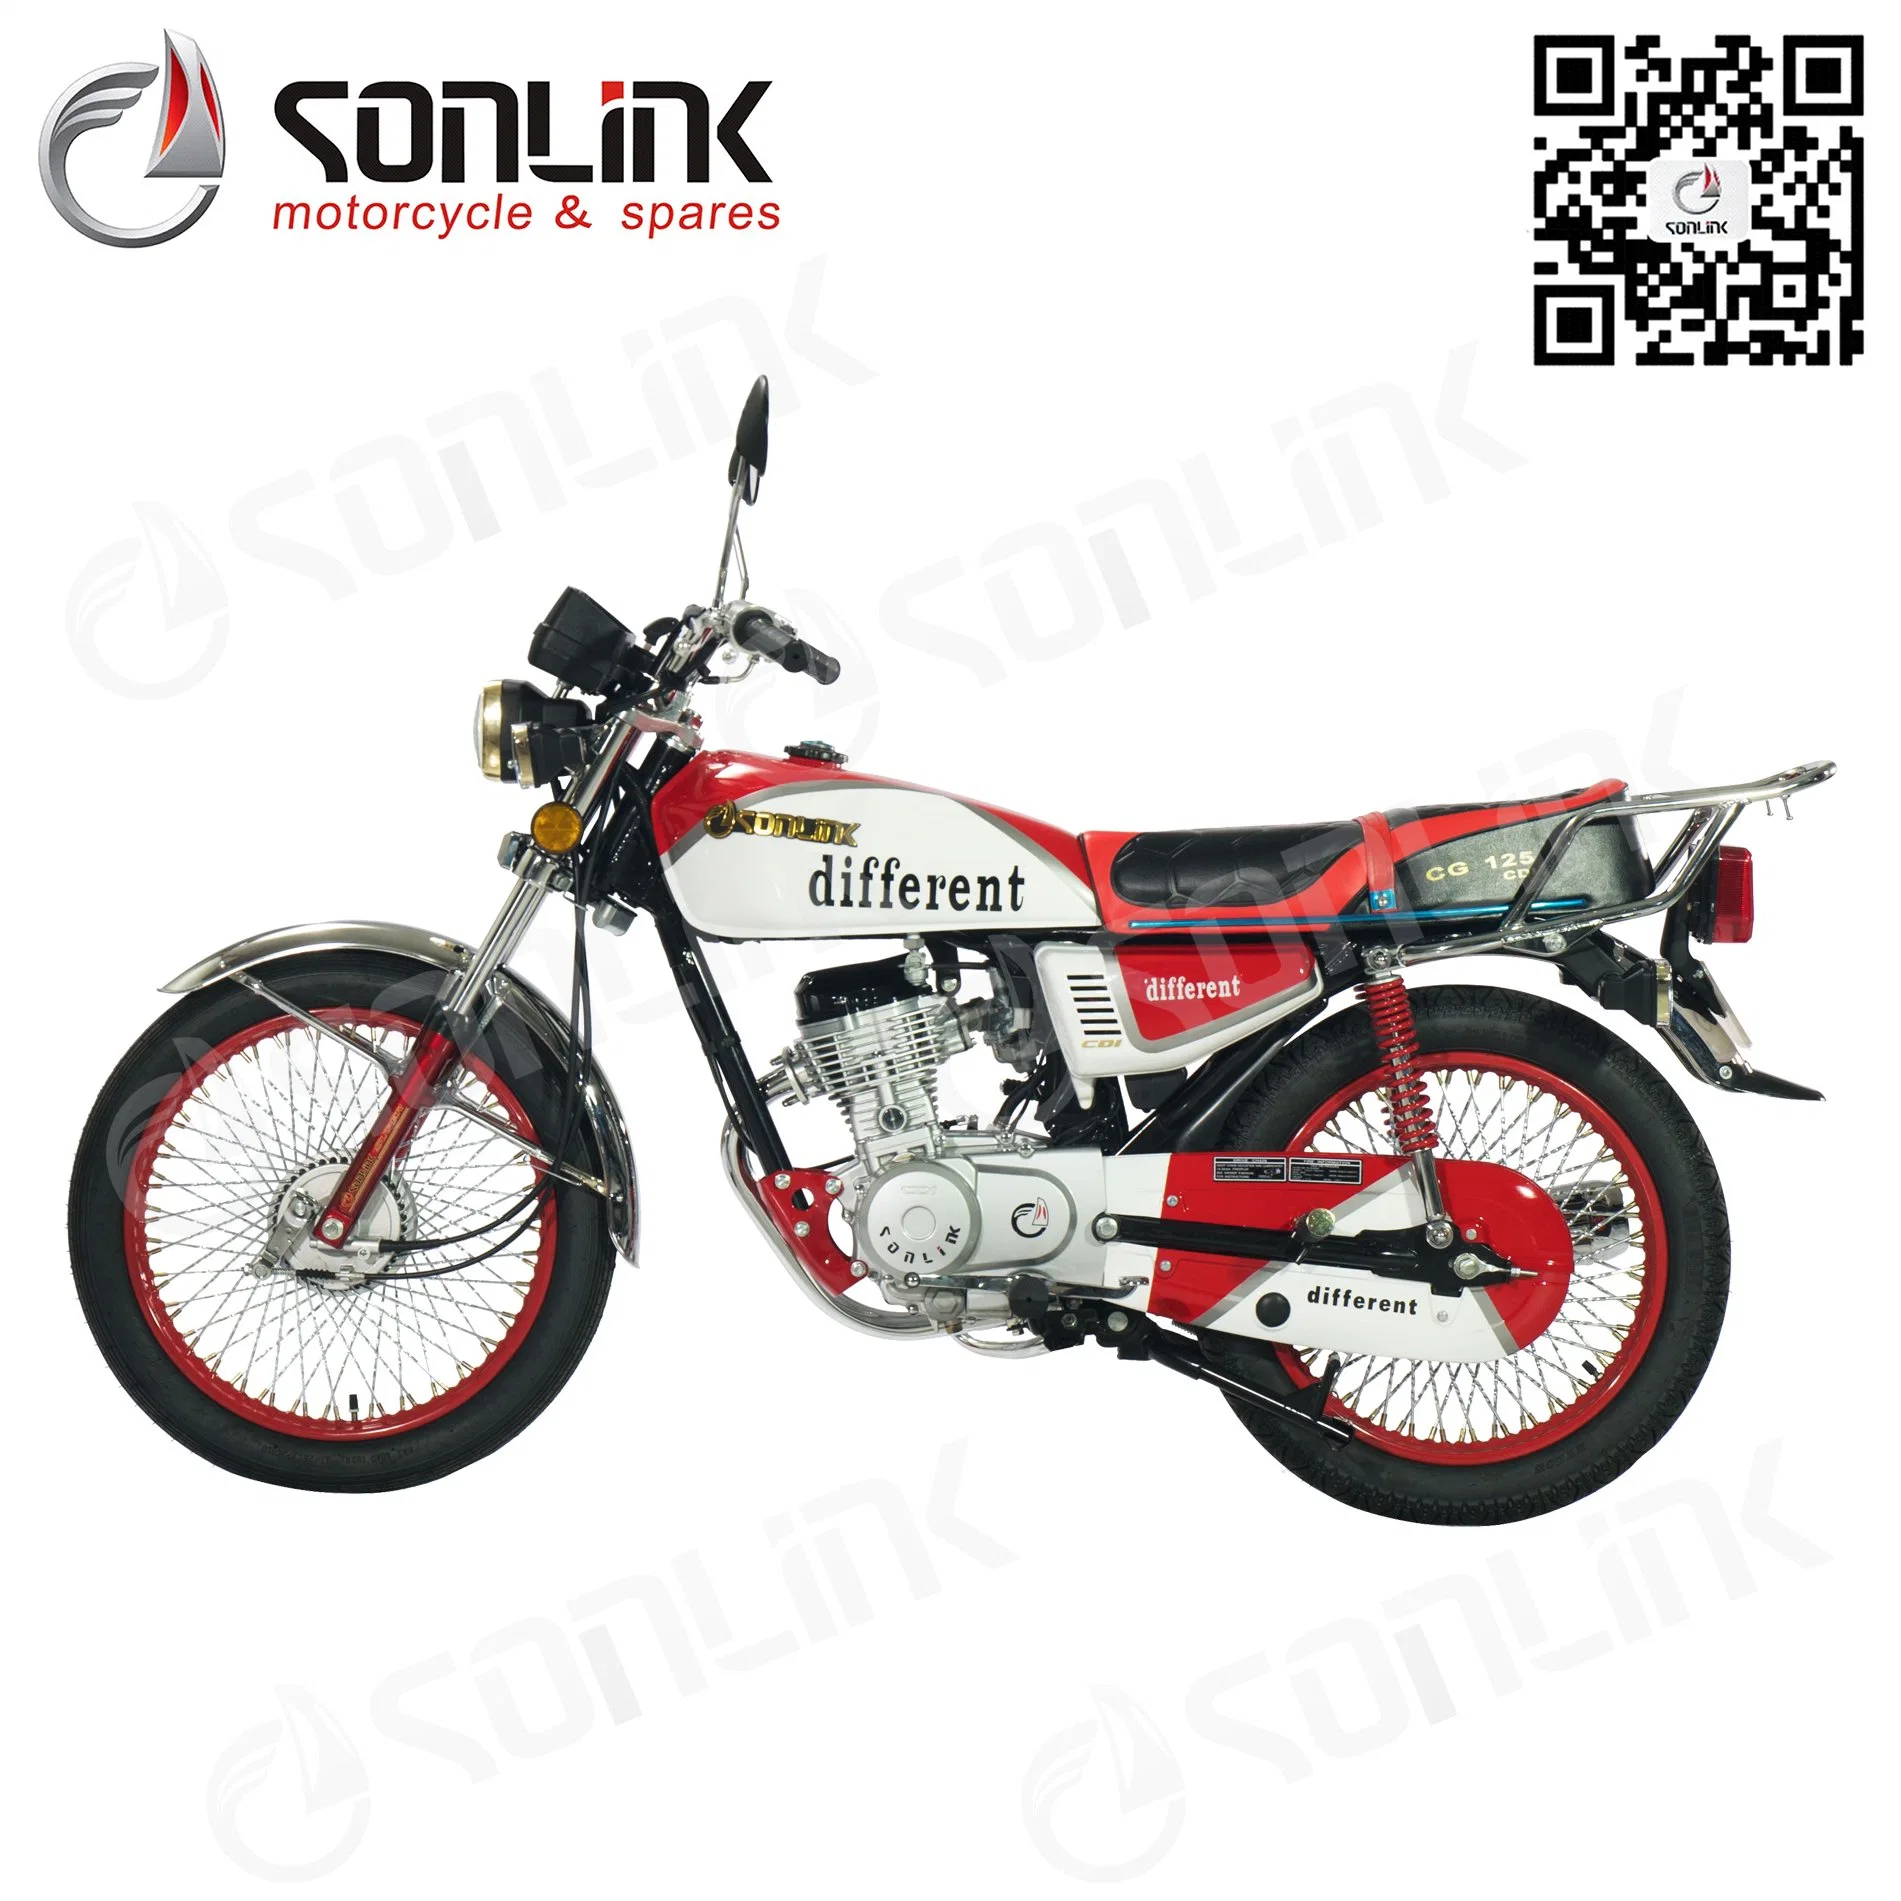 125cc 150cc 200cc Afghan Coloration Cg Model Manned 125cc Motorcycle/150cc Motorbike/ 200cc Motor Cycle (SL150-C)